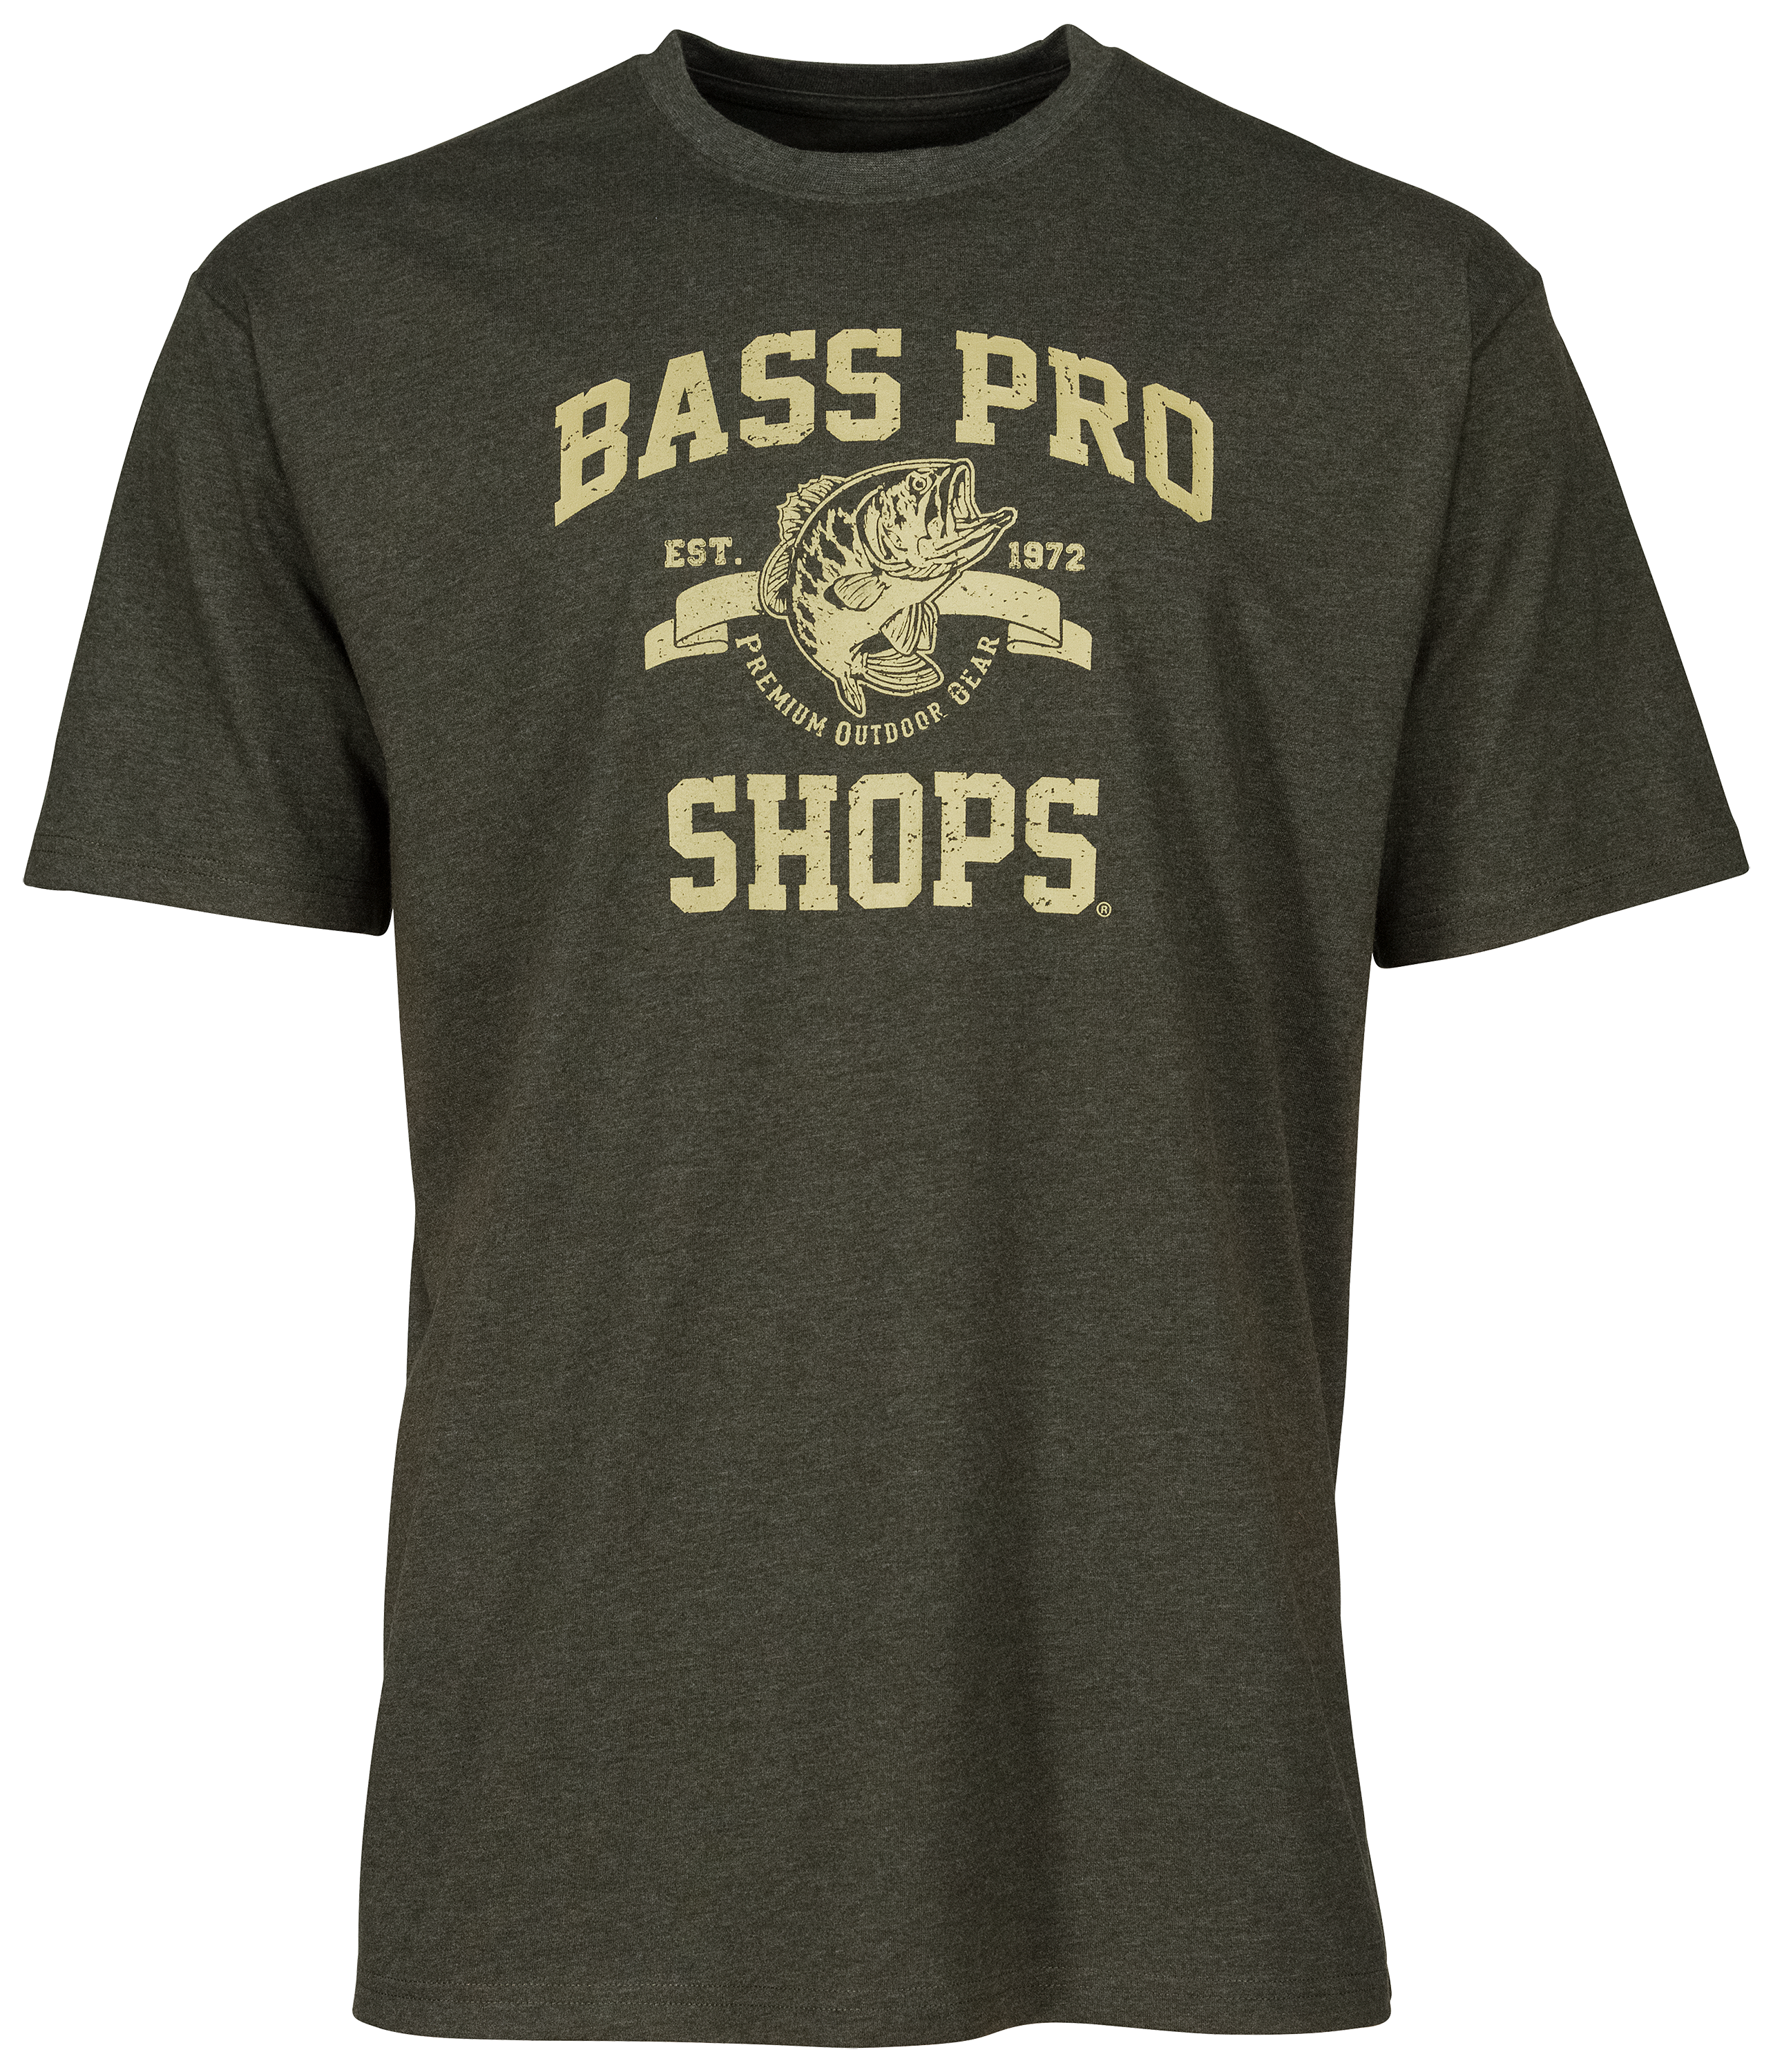 Bass Pro Shops Classic Logo Short-Sleeve T-Shirt for Men